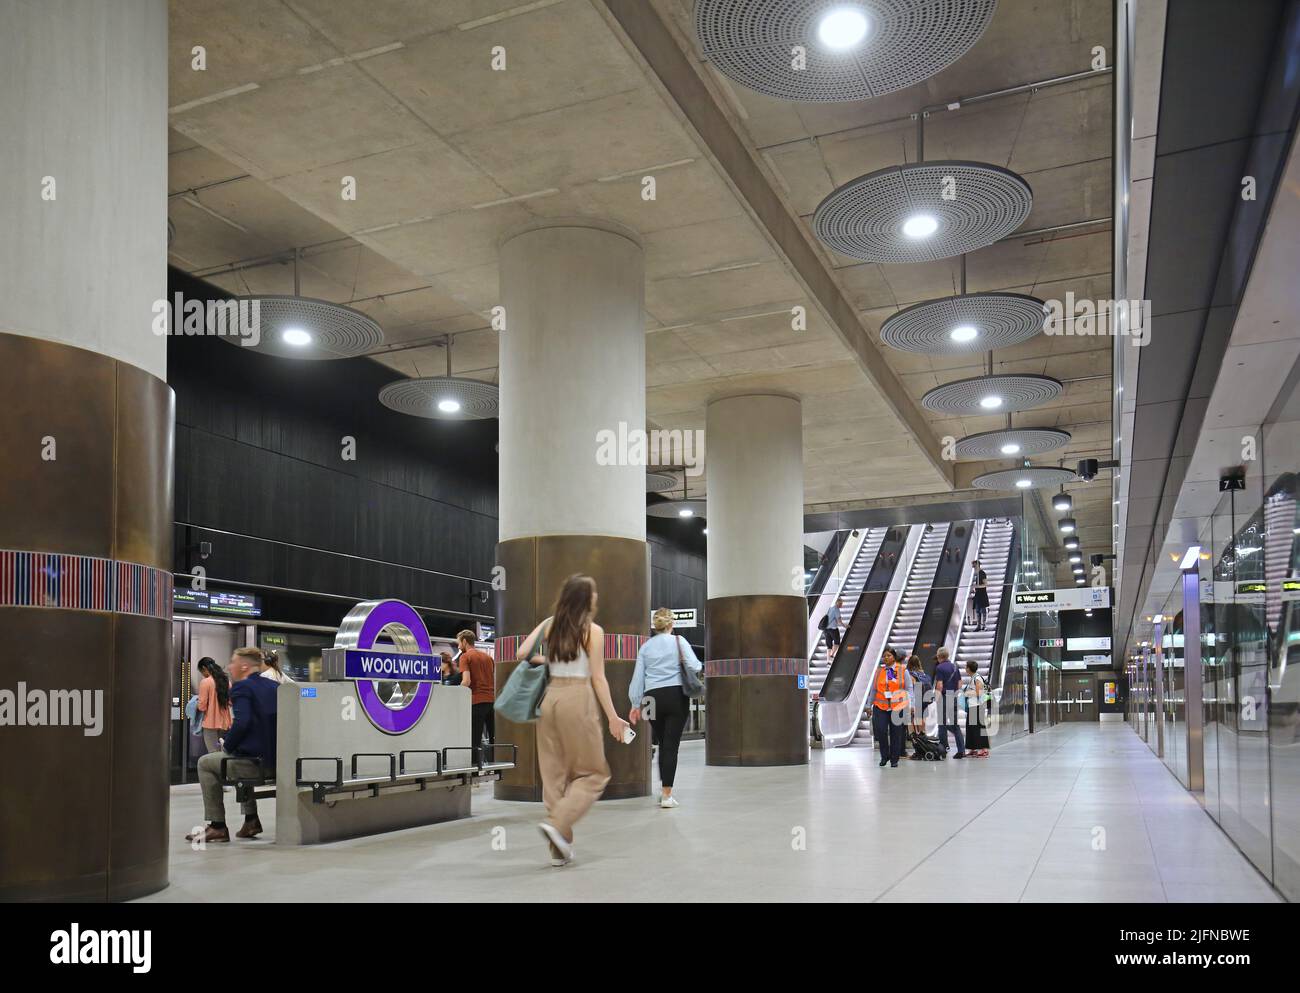 London, UK. Woolwich Station on the newly opened Elizabeth Line (crossrail) underground rail network. Platform level, shows train and escalators. Stock Photo